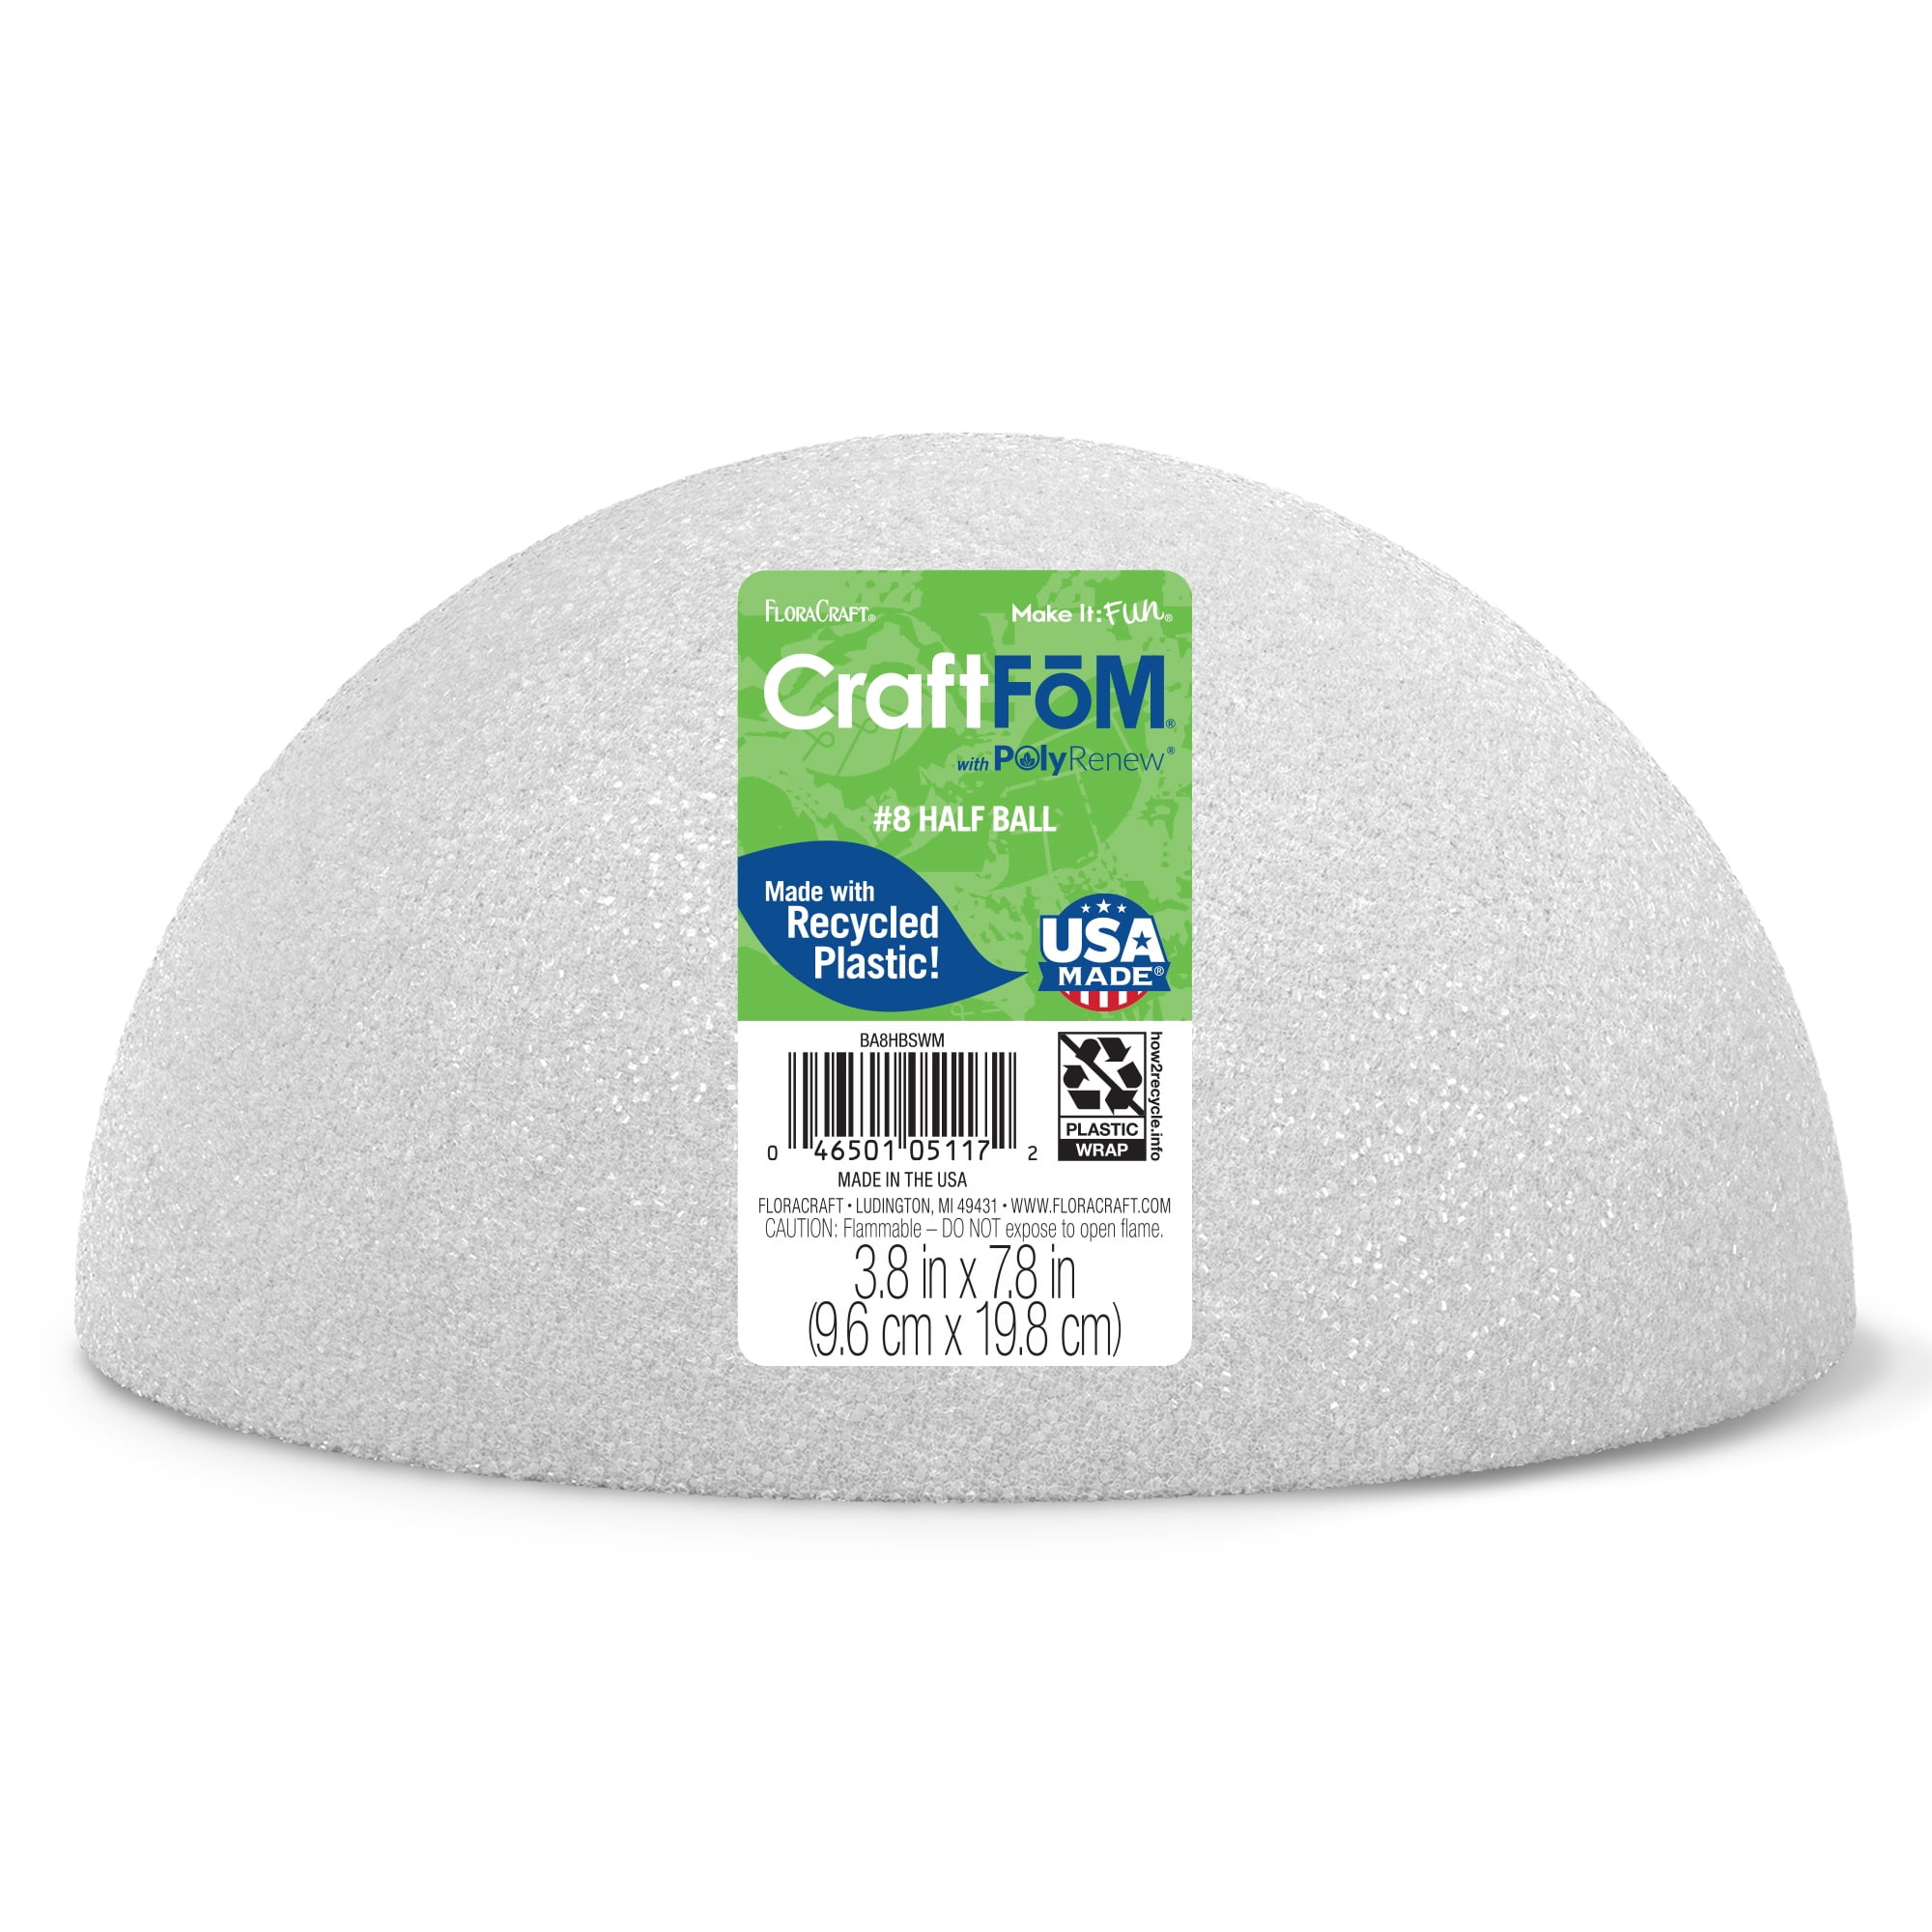 Floracraft CraftFM 12 Piece Crafting Foam Ball 1.8 inch White